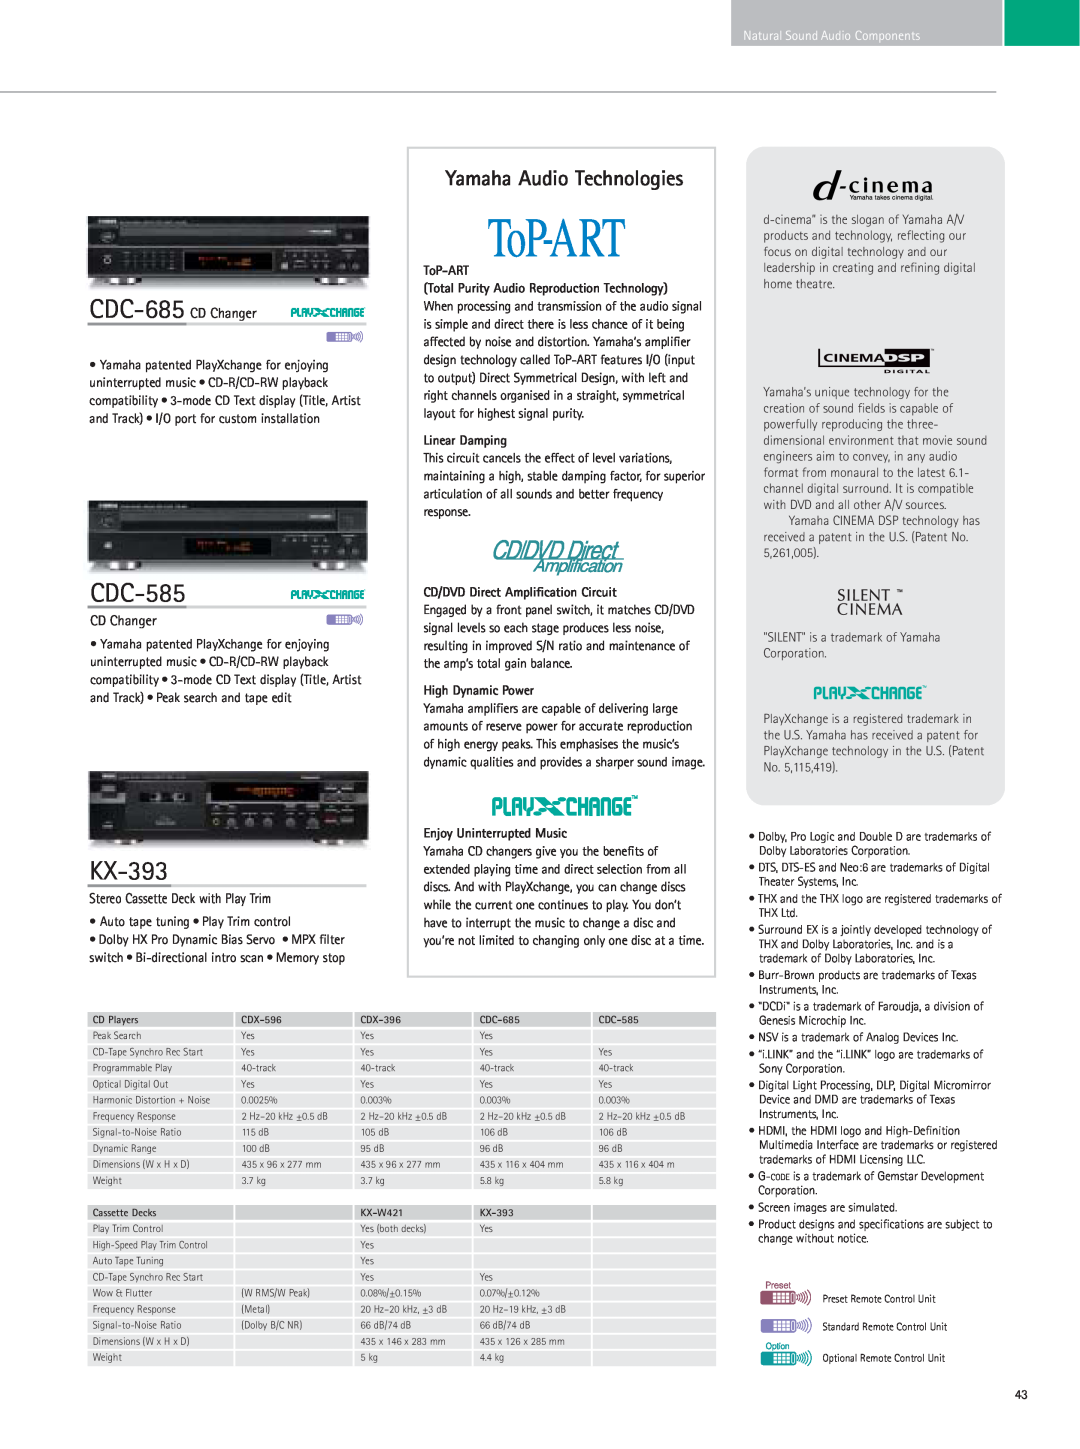 Yamaha RX-Z9 CDC-585, KX-393, Yamaha Audio Technologies, CDC-685 CD Changer, Stereo Cassette Deck with Play Trim, ToP-ART 